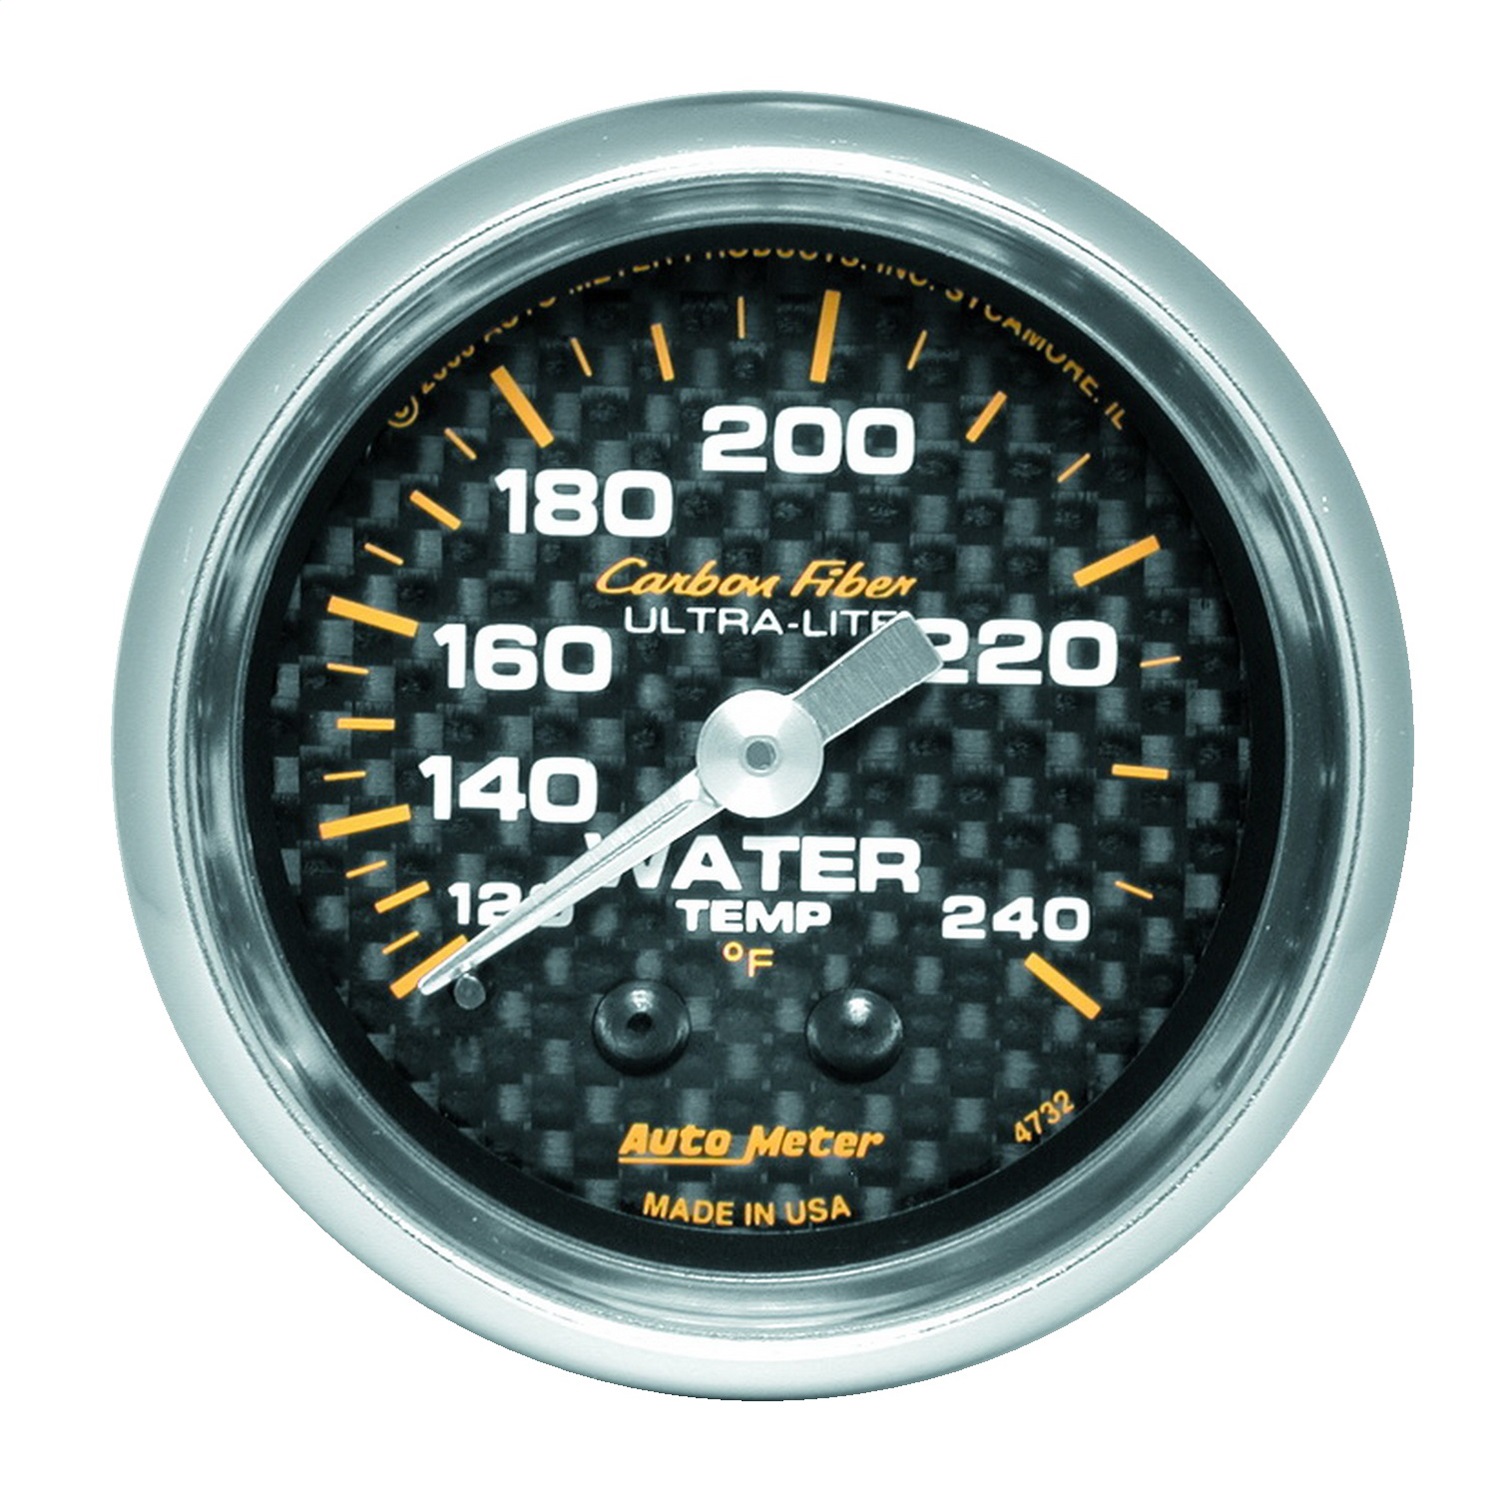 Auto Meter Auto Meter 4732 Carbon Fiber; Mechanical Water Temperature Gauge